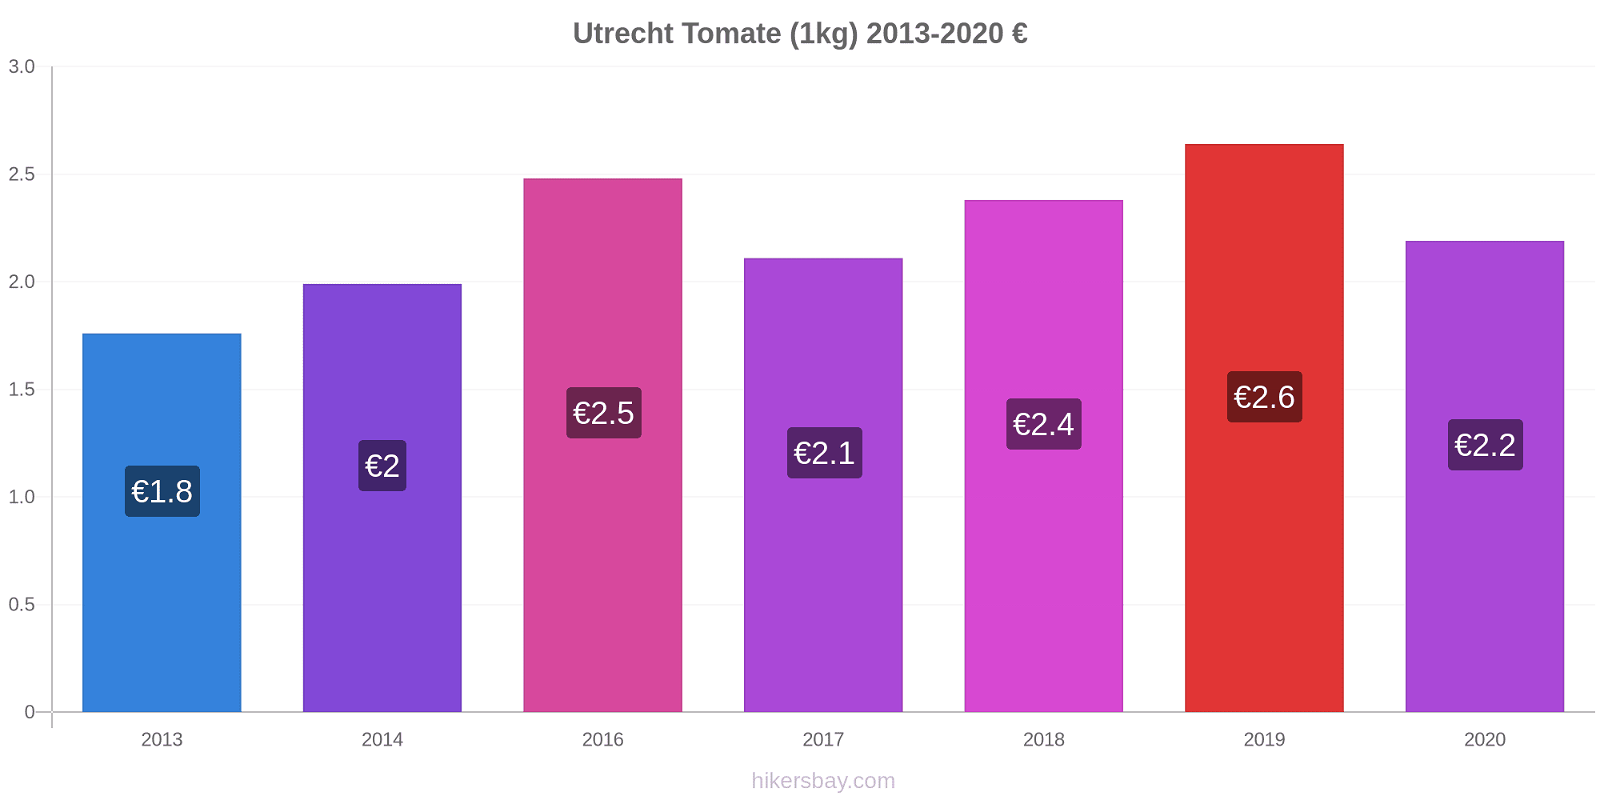 Utrecht cambios de precios Tomate (1kg) hikersbay.com